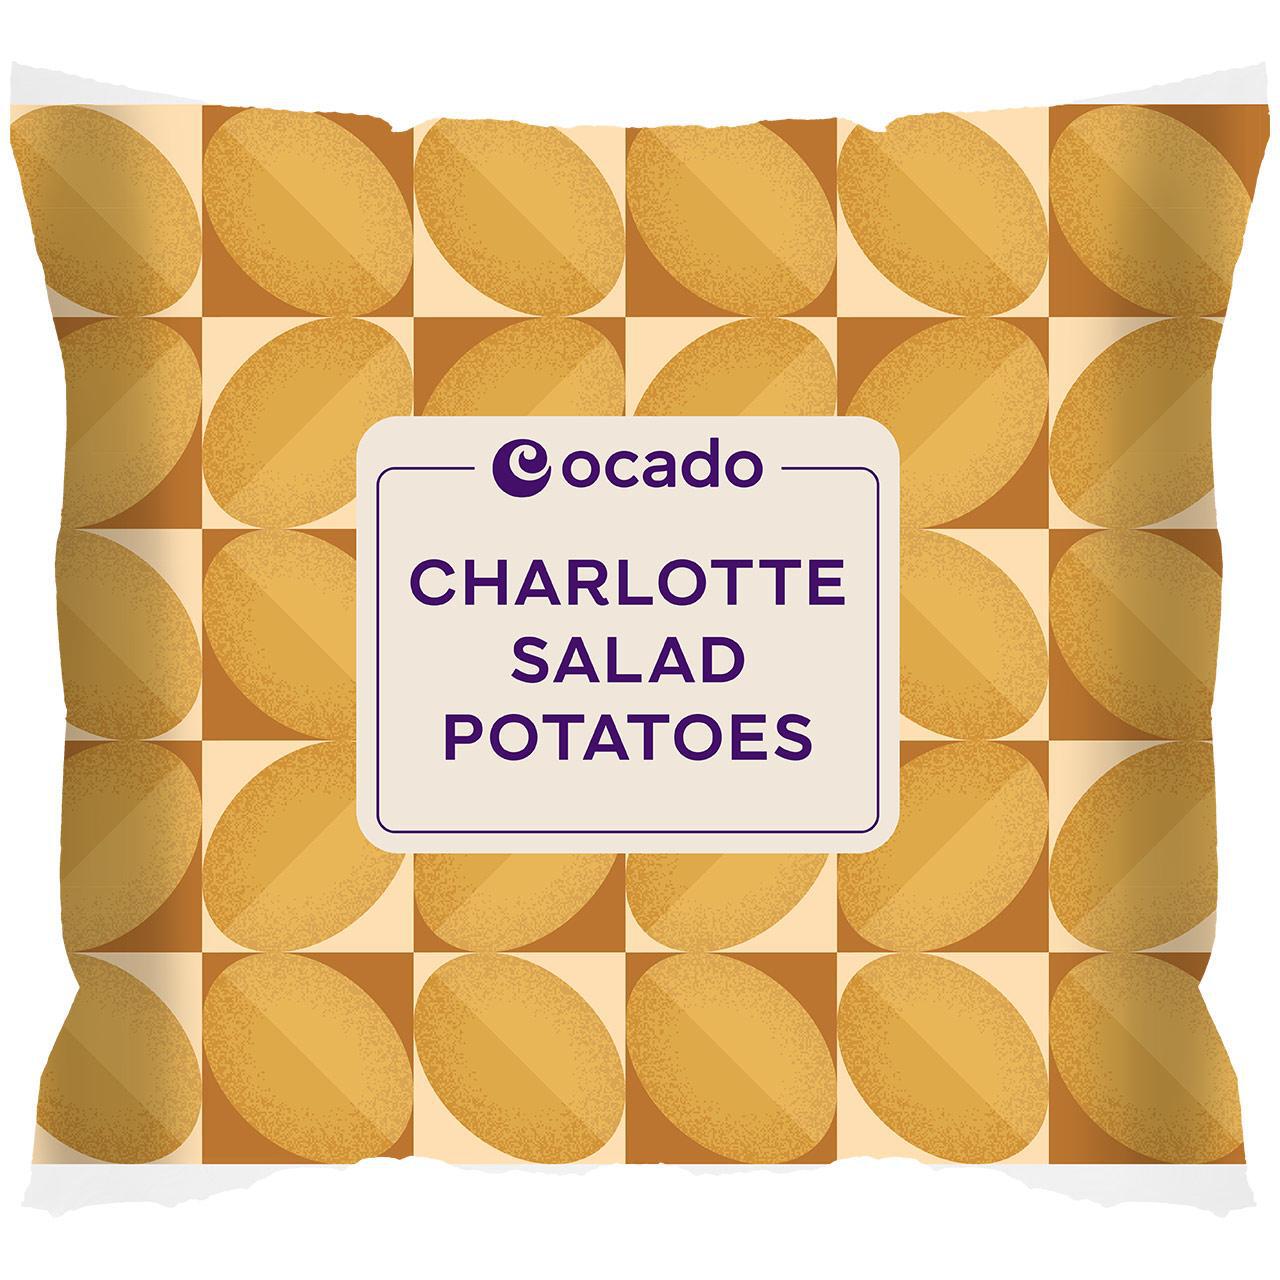 Ocado Charlotte Salad Potatoes 1kg